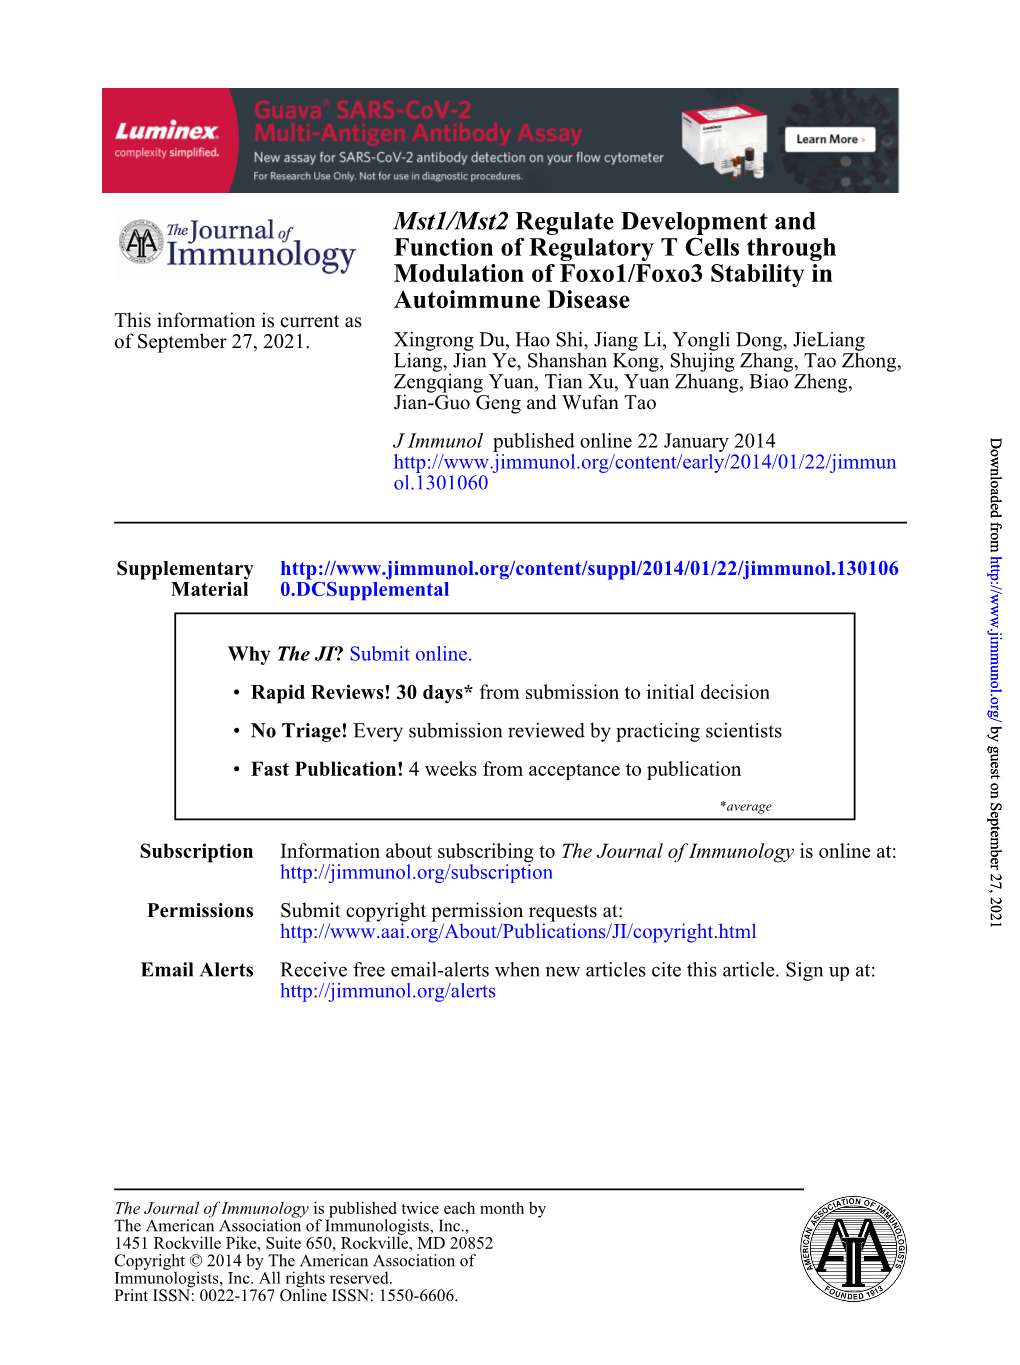 Mst1/Mst2 Regulate Development and Function of Regulatory T Cells